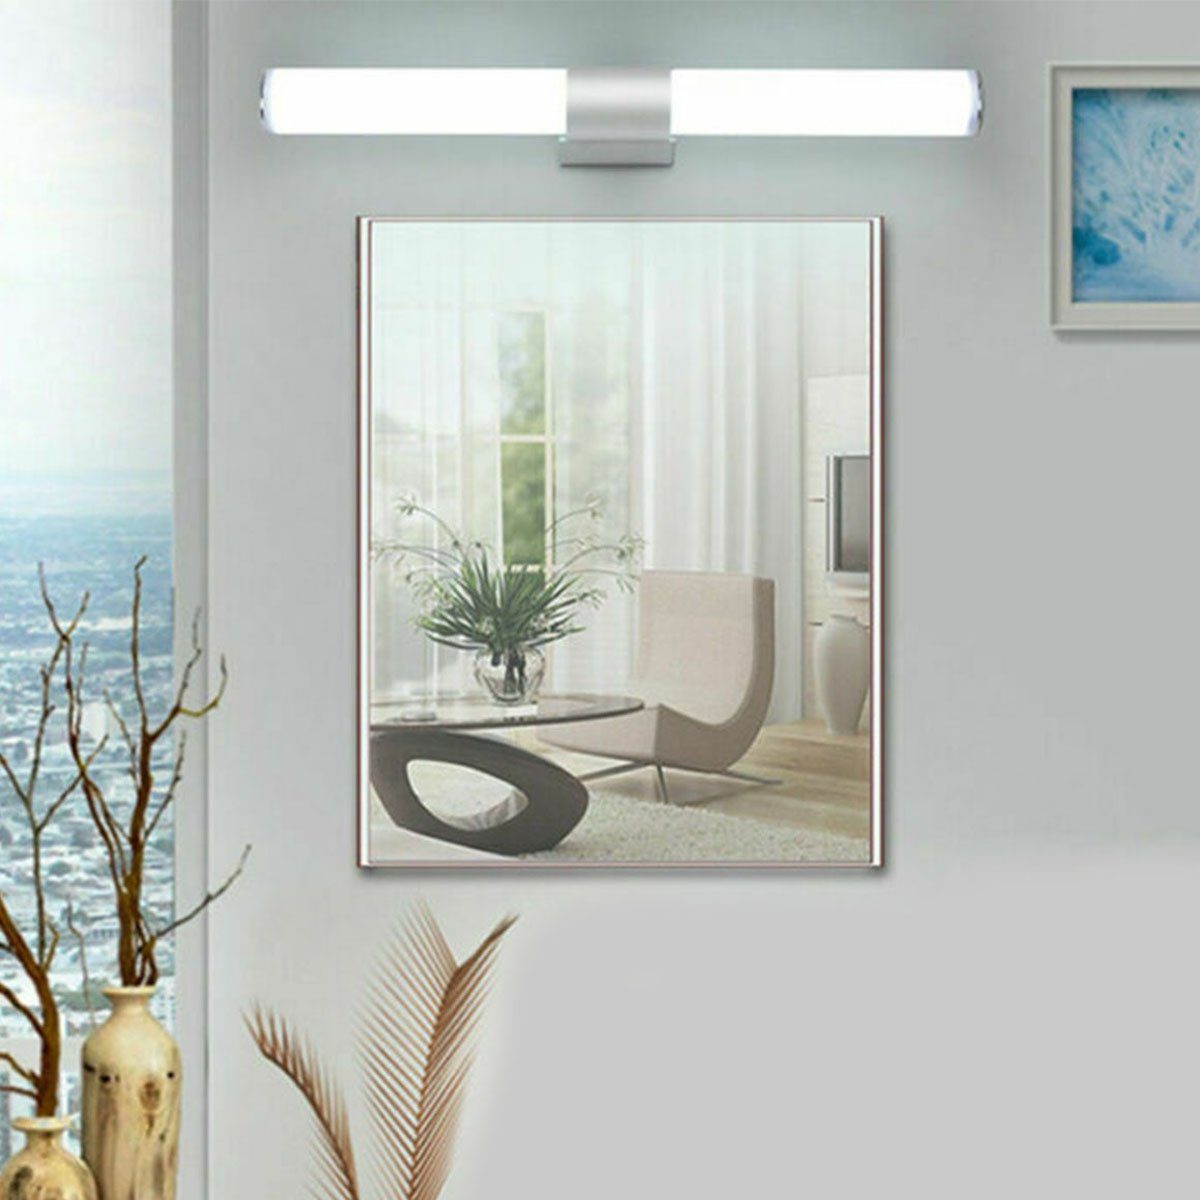 Frontbeleuchtung Badezimmer-Schminkspiegel Badezimmerspiegel Spiegelleuchte Spiegelleuchte, LED Kaltweiß IP44, 55cm, LED oyajia 22W, 22W Edelstahl, integriert, fest Lichtschrank Wandleuchte